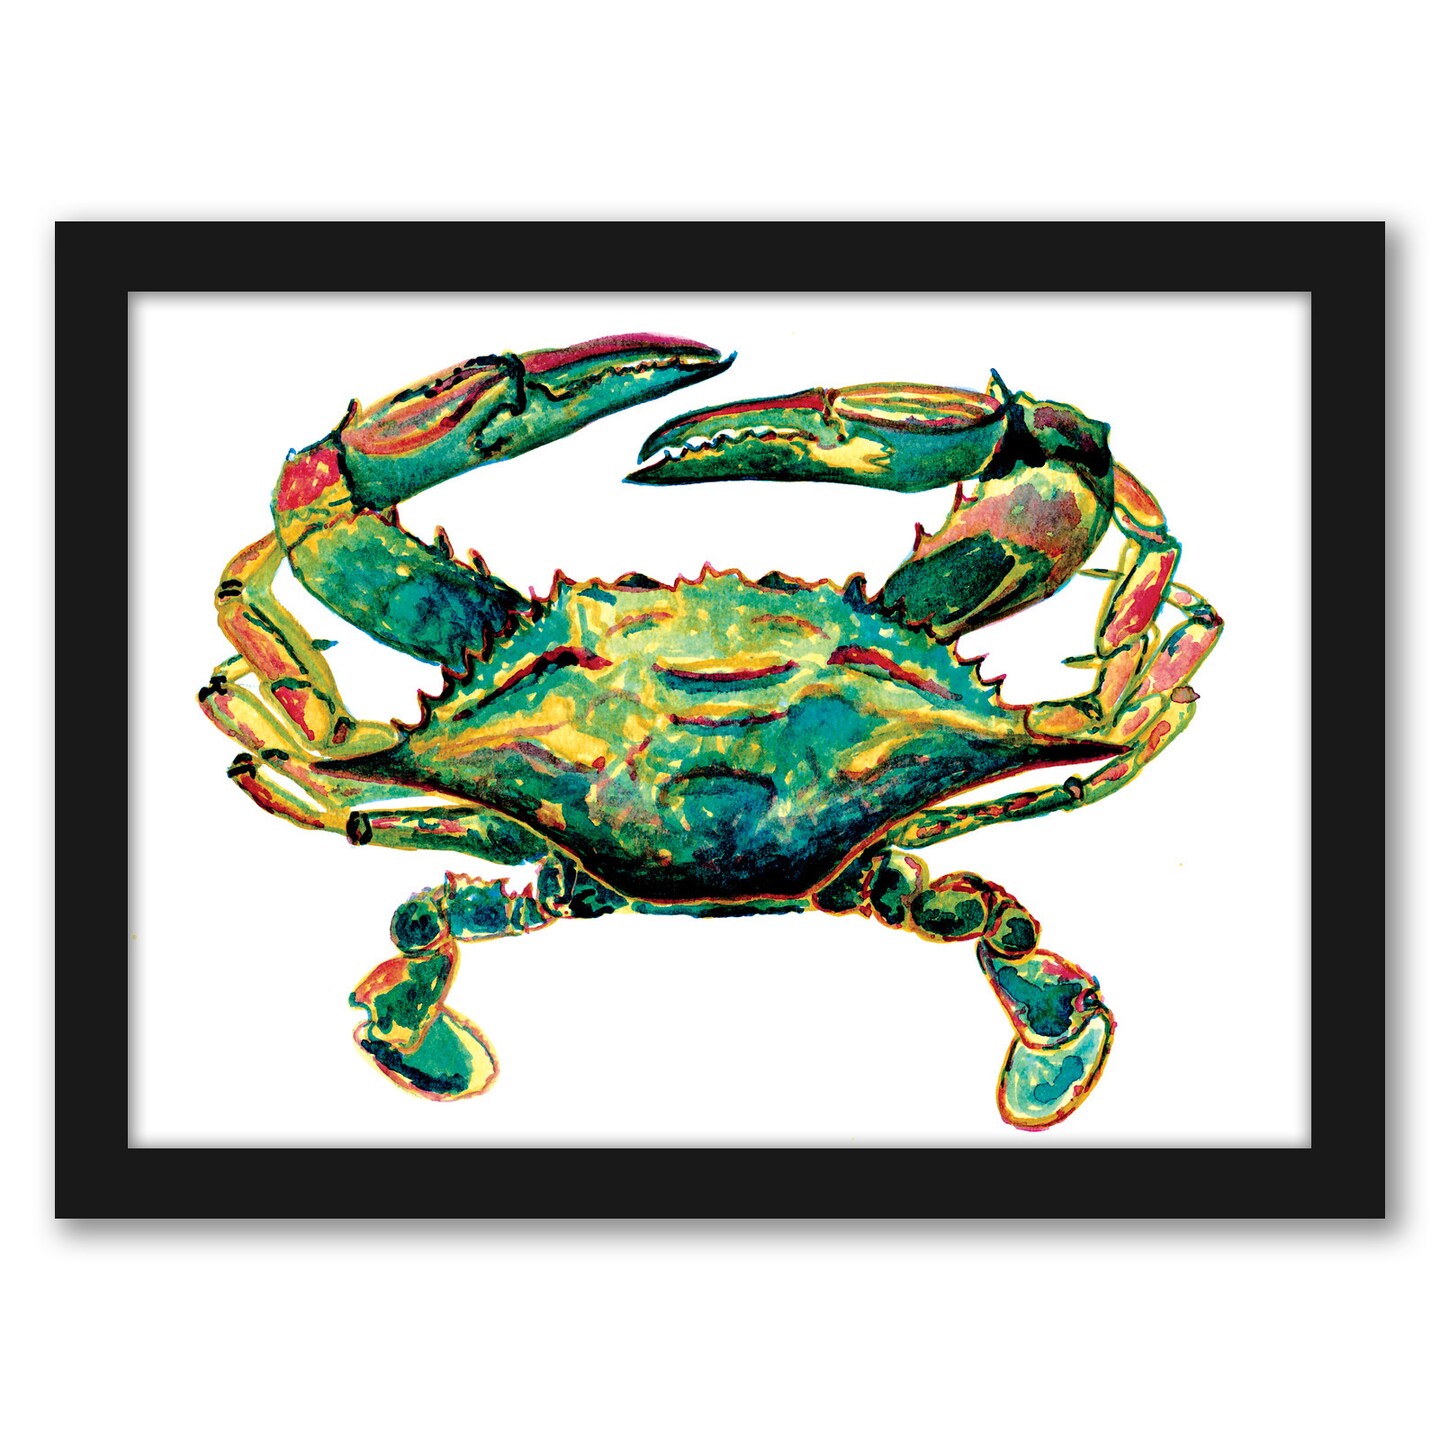 Blue Crab2 by T.J. Heiser Frame  - Americanflat